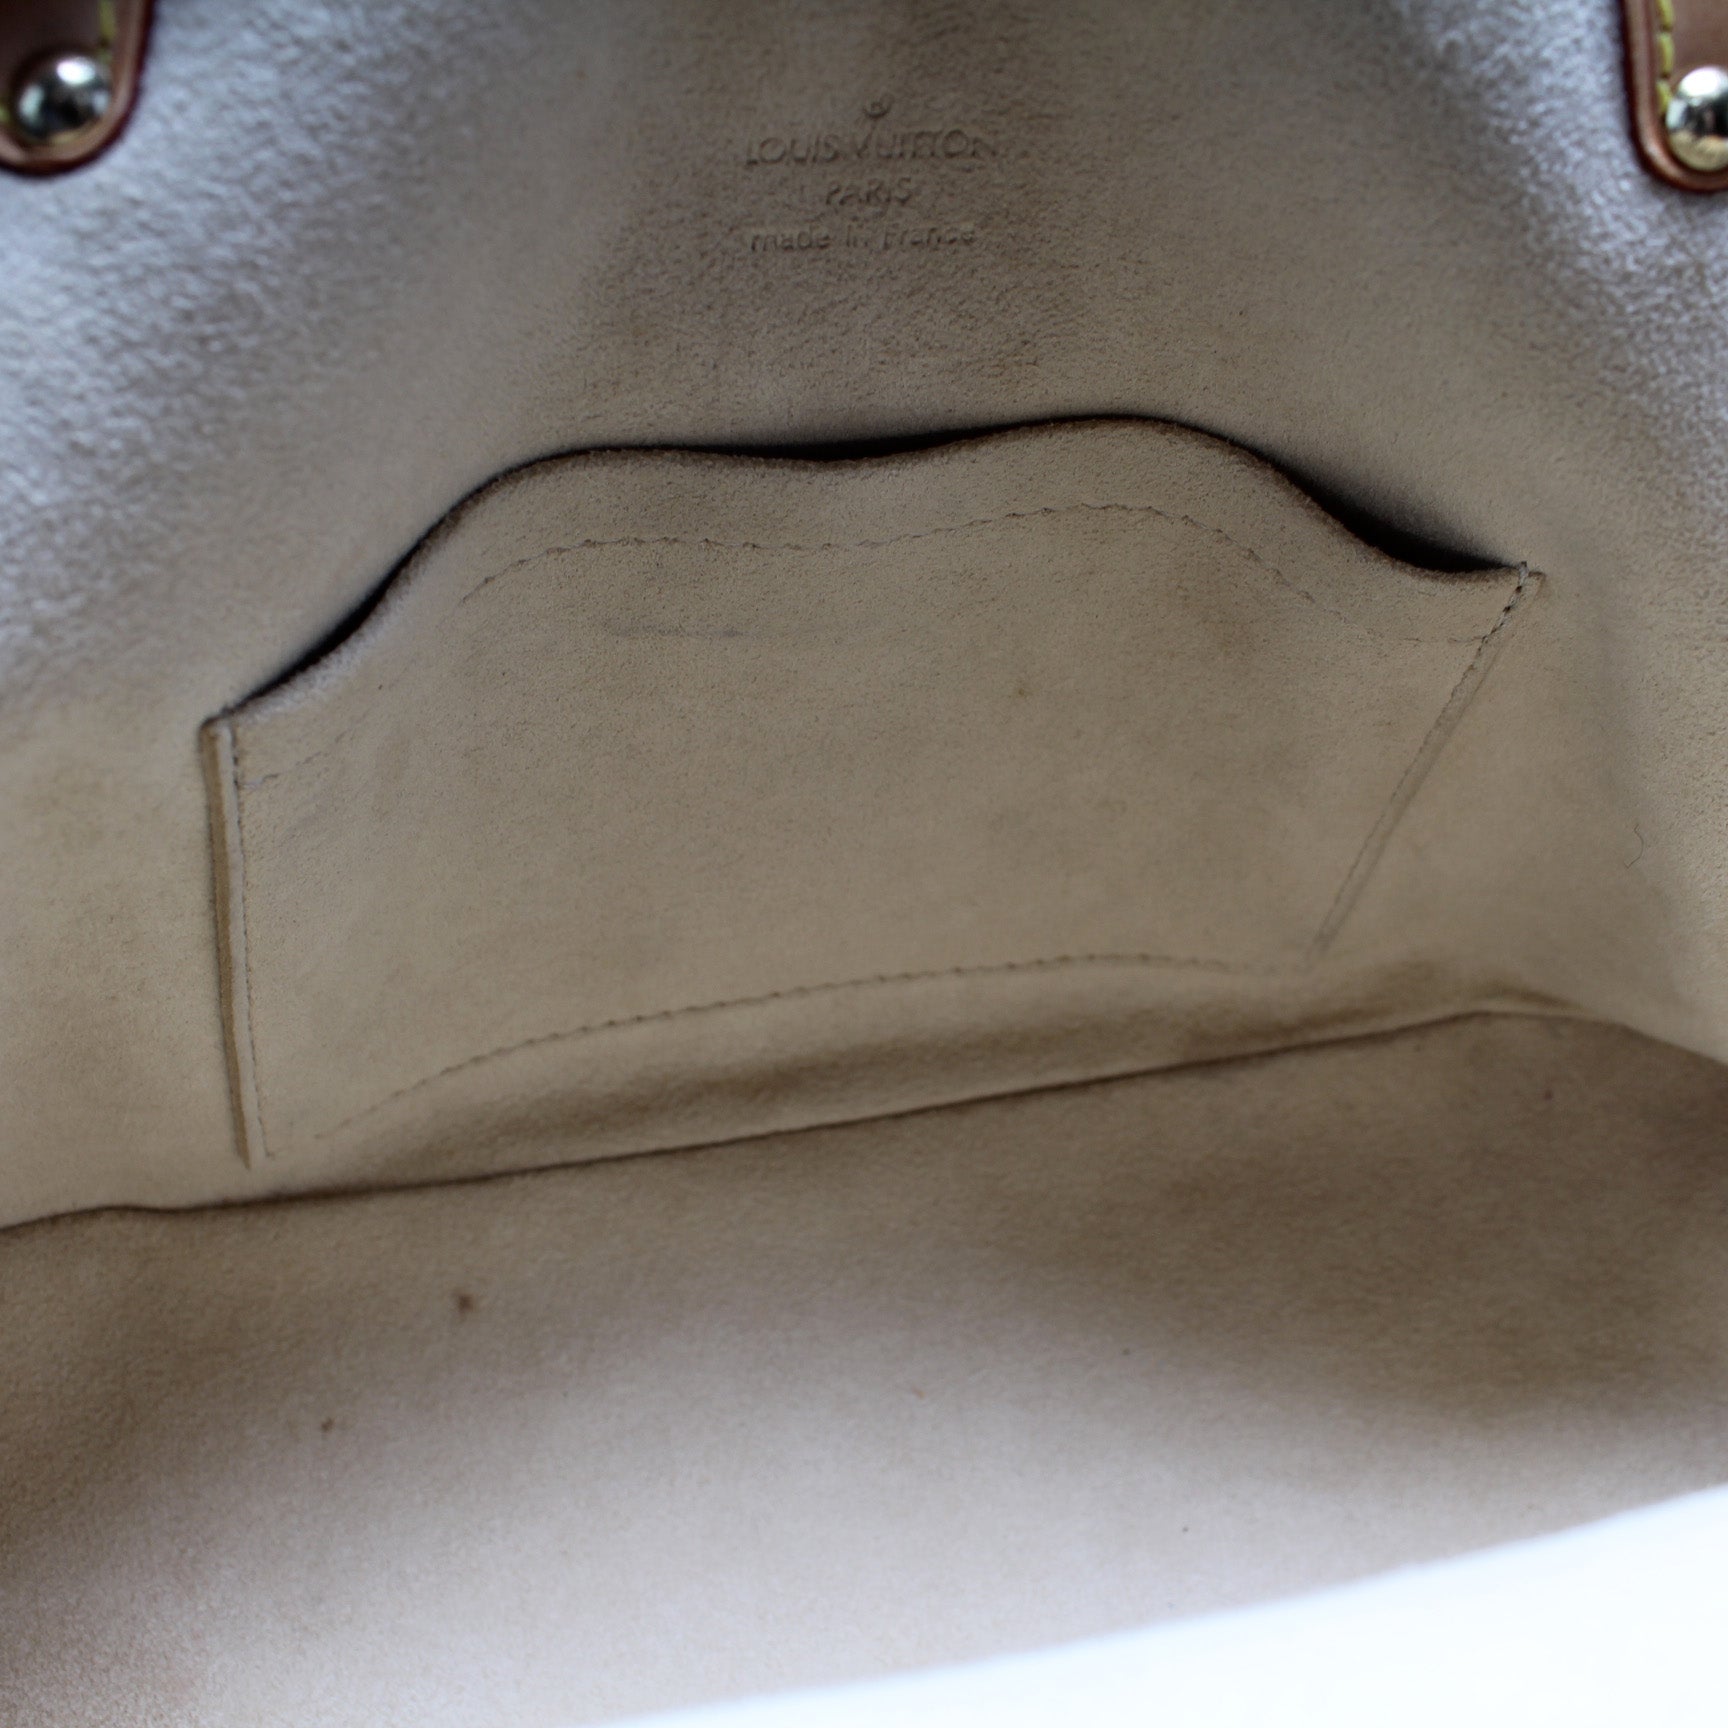 Theda GM Monogram – Keeks Designer Handbags